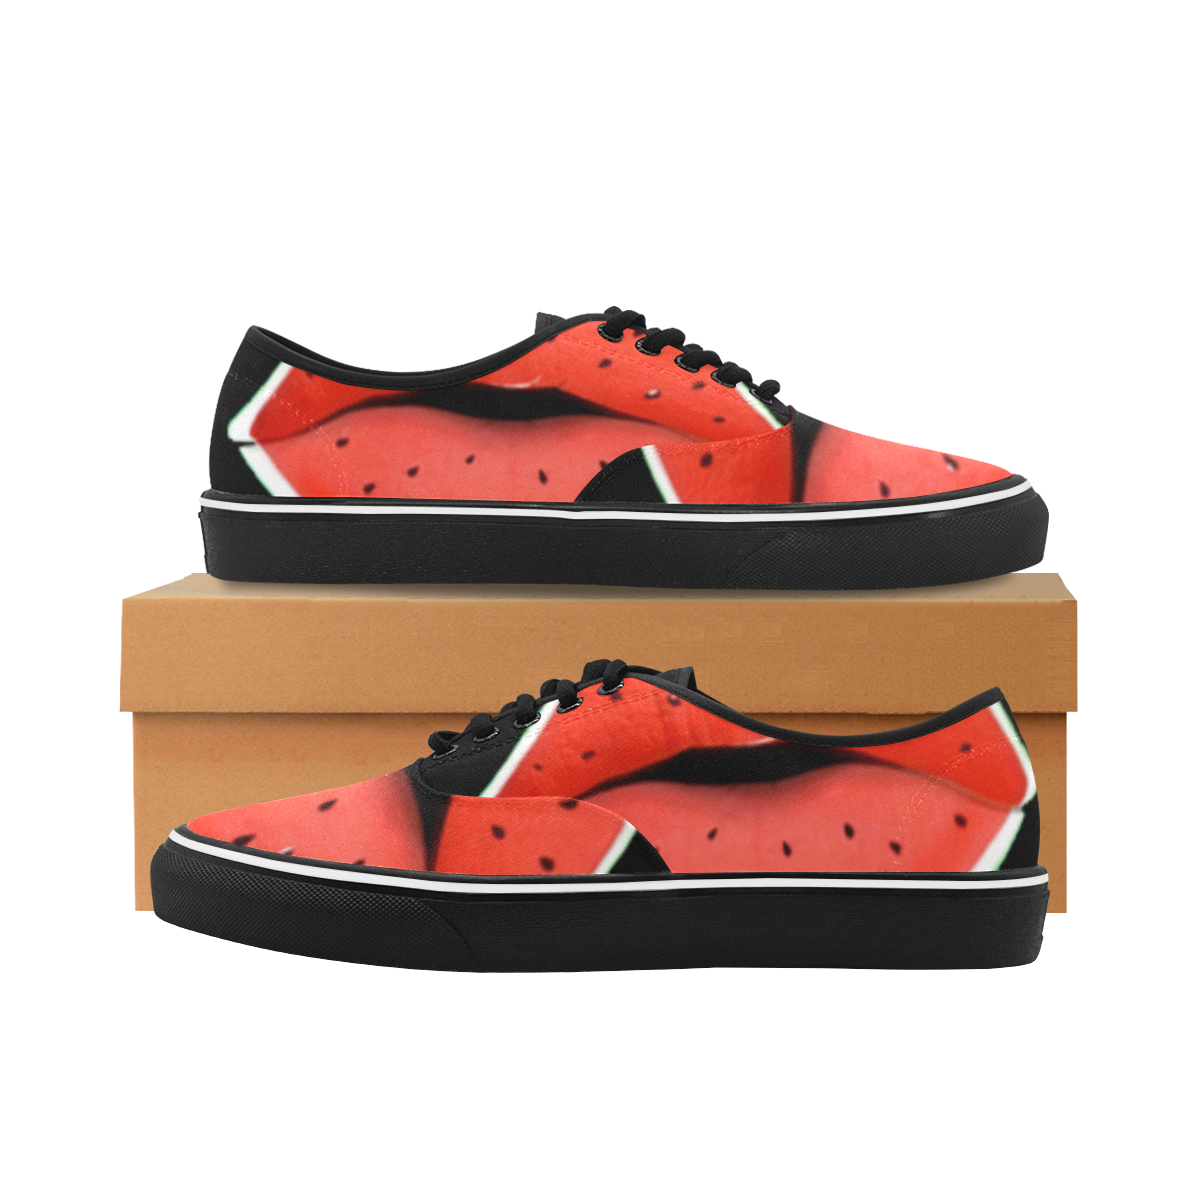 StrawberryLips mens Classic Men's Canvas Low Top Shoes/Large (Model E001-4)